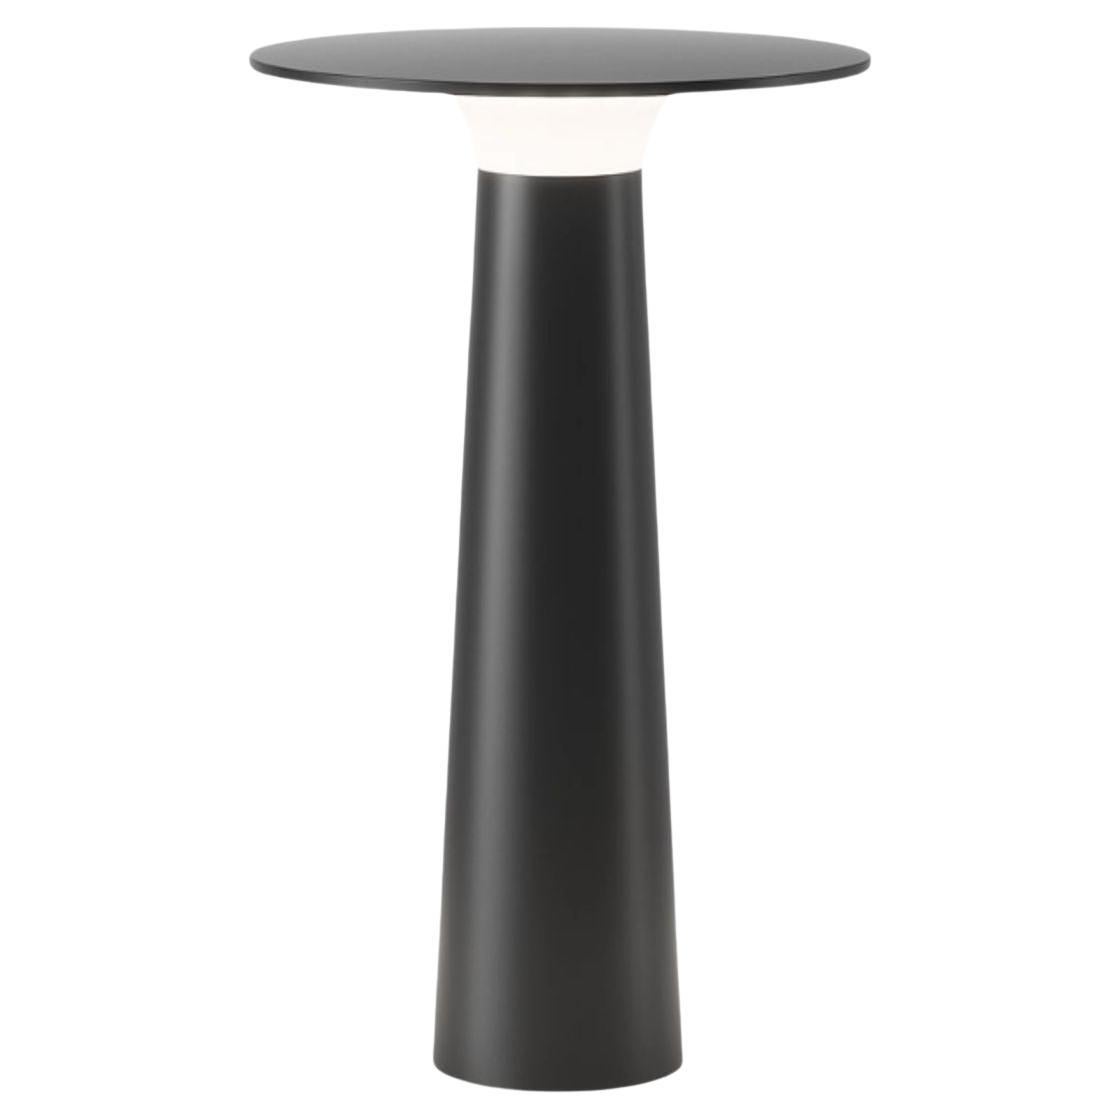 Klaus Nolting 'Lix' Portable Outdoor Aluminum Table Lamp in Black for Ip44de For Sale